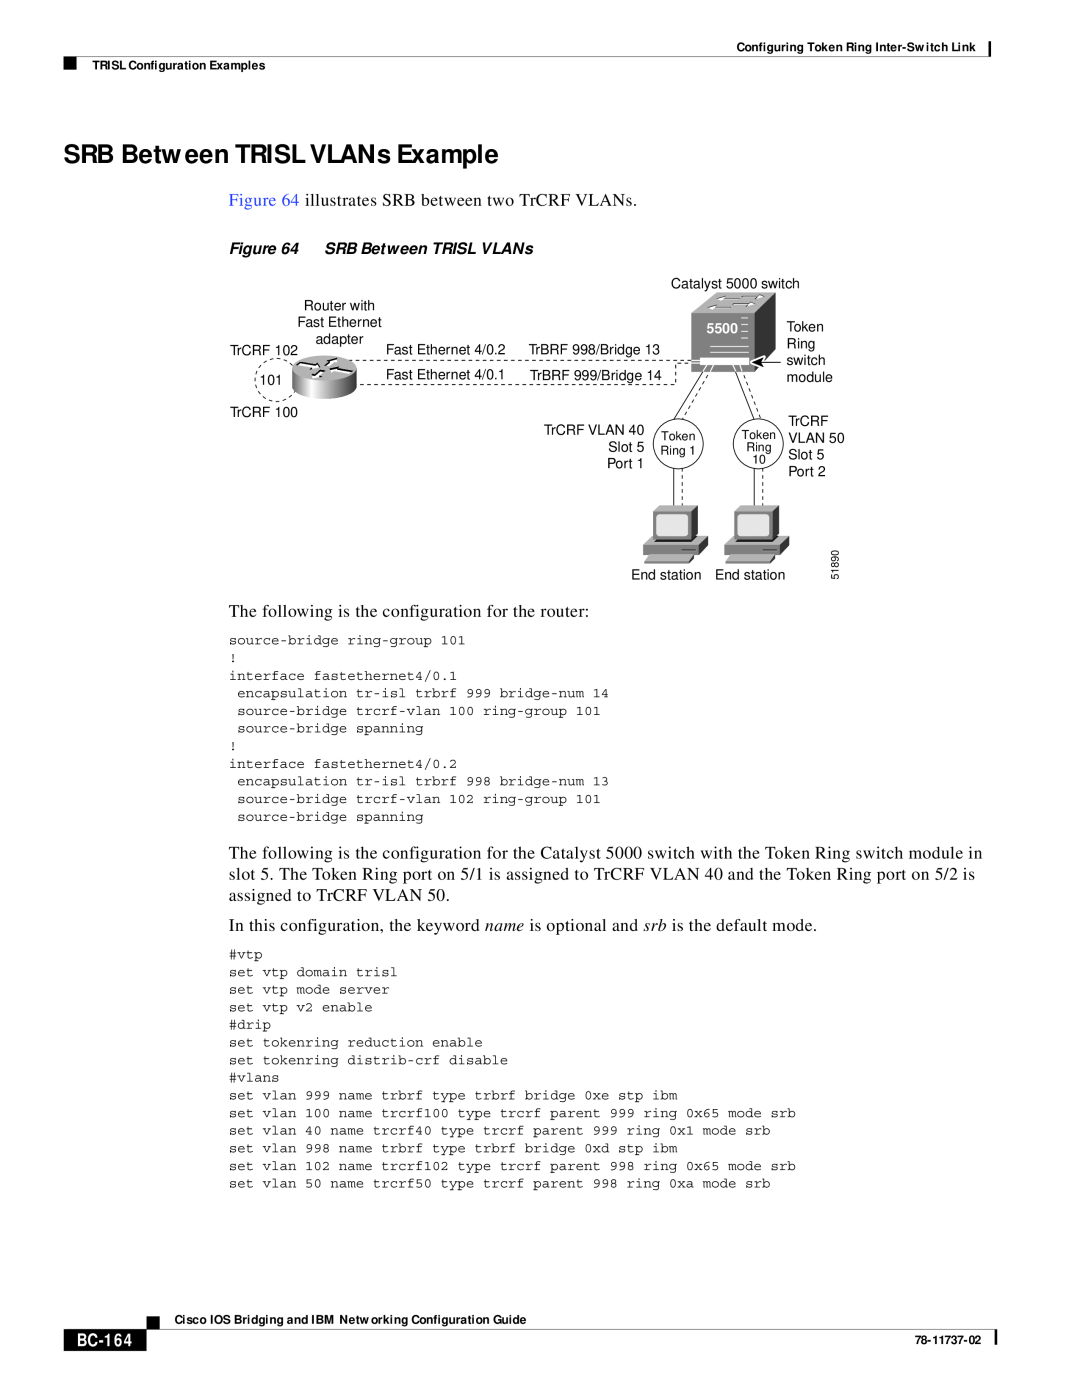 Cisco Systems BC-145 manual SRB Between TRISL VLANs Example, BC-164, 5500, 78-11737-02 